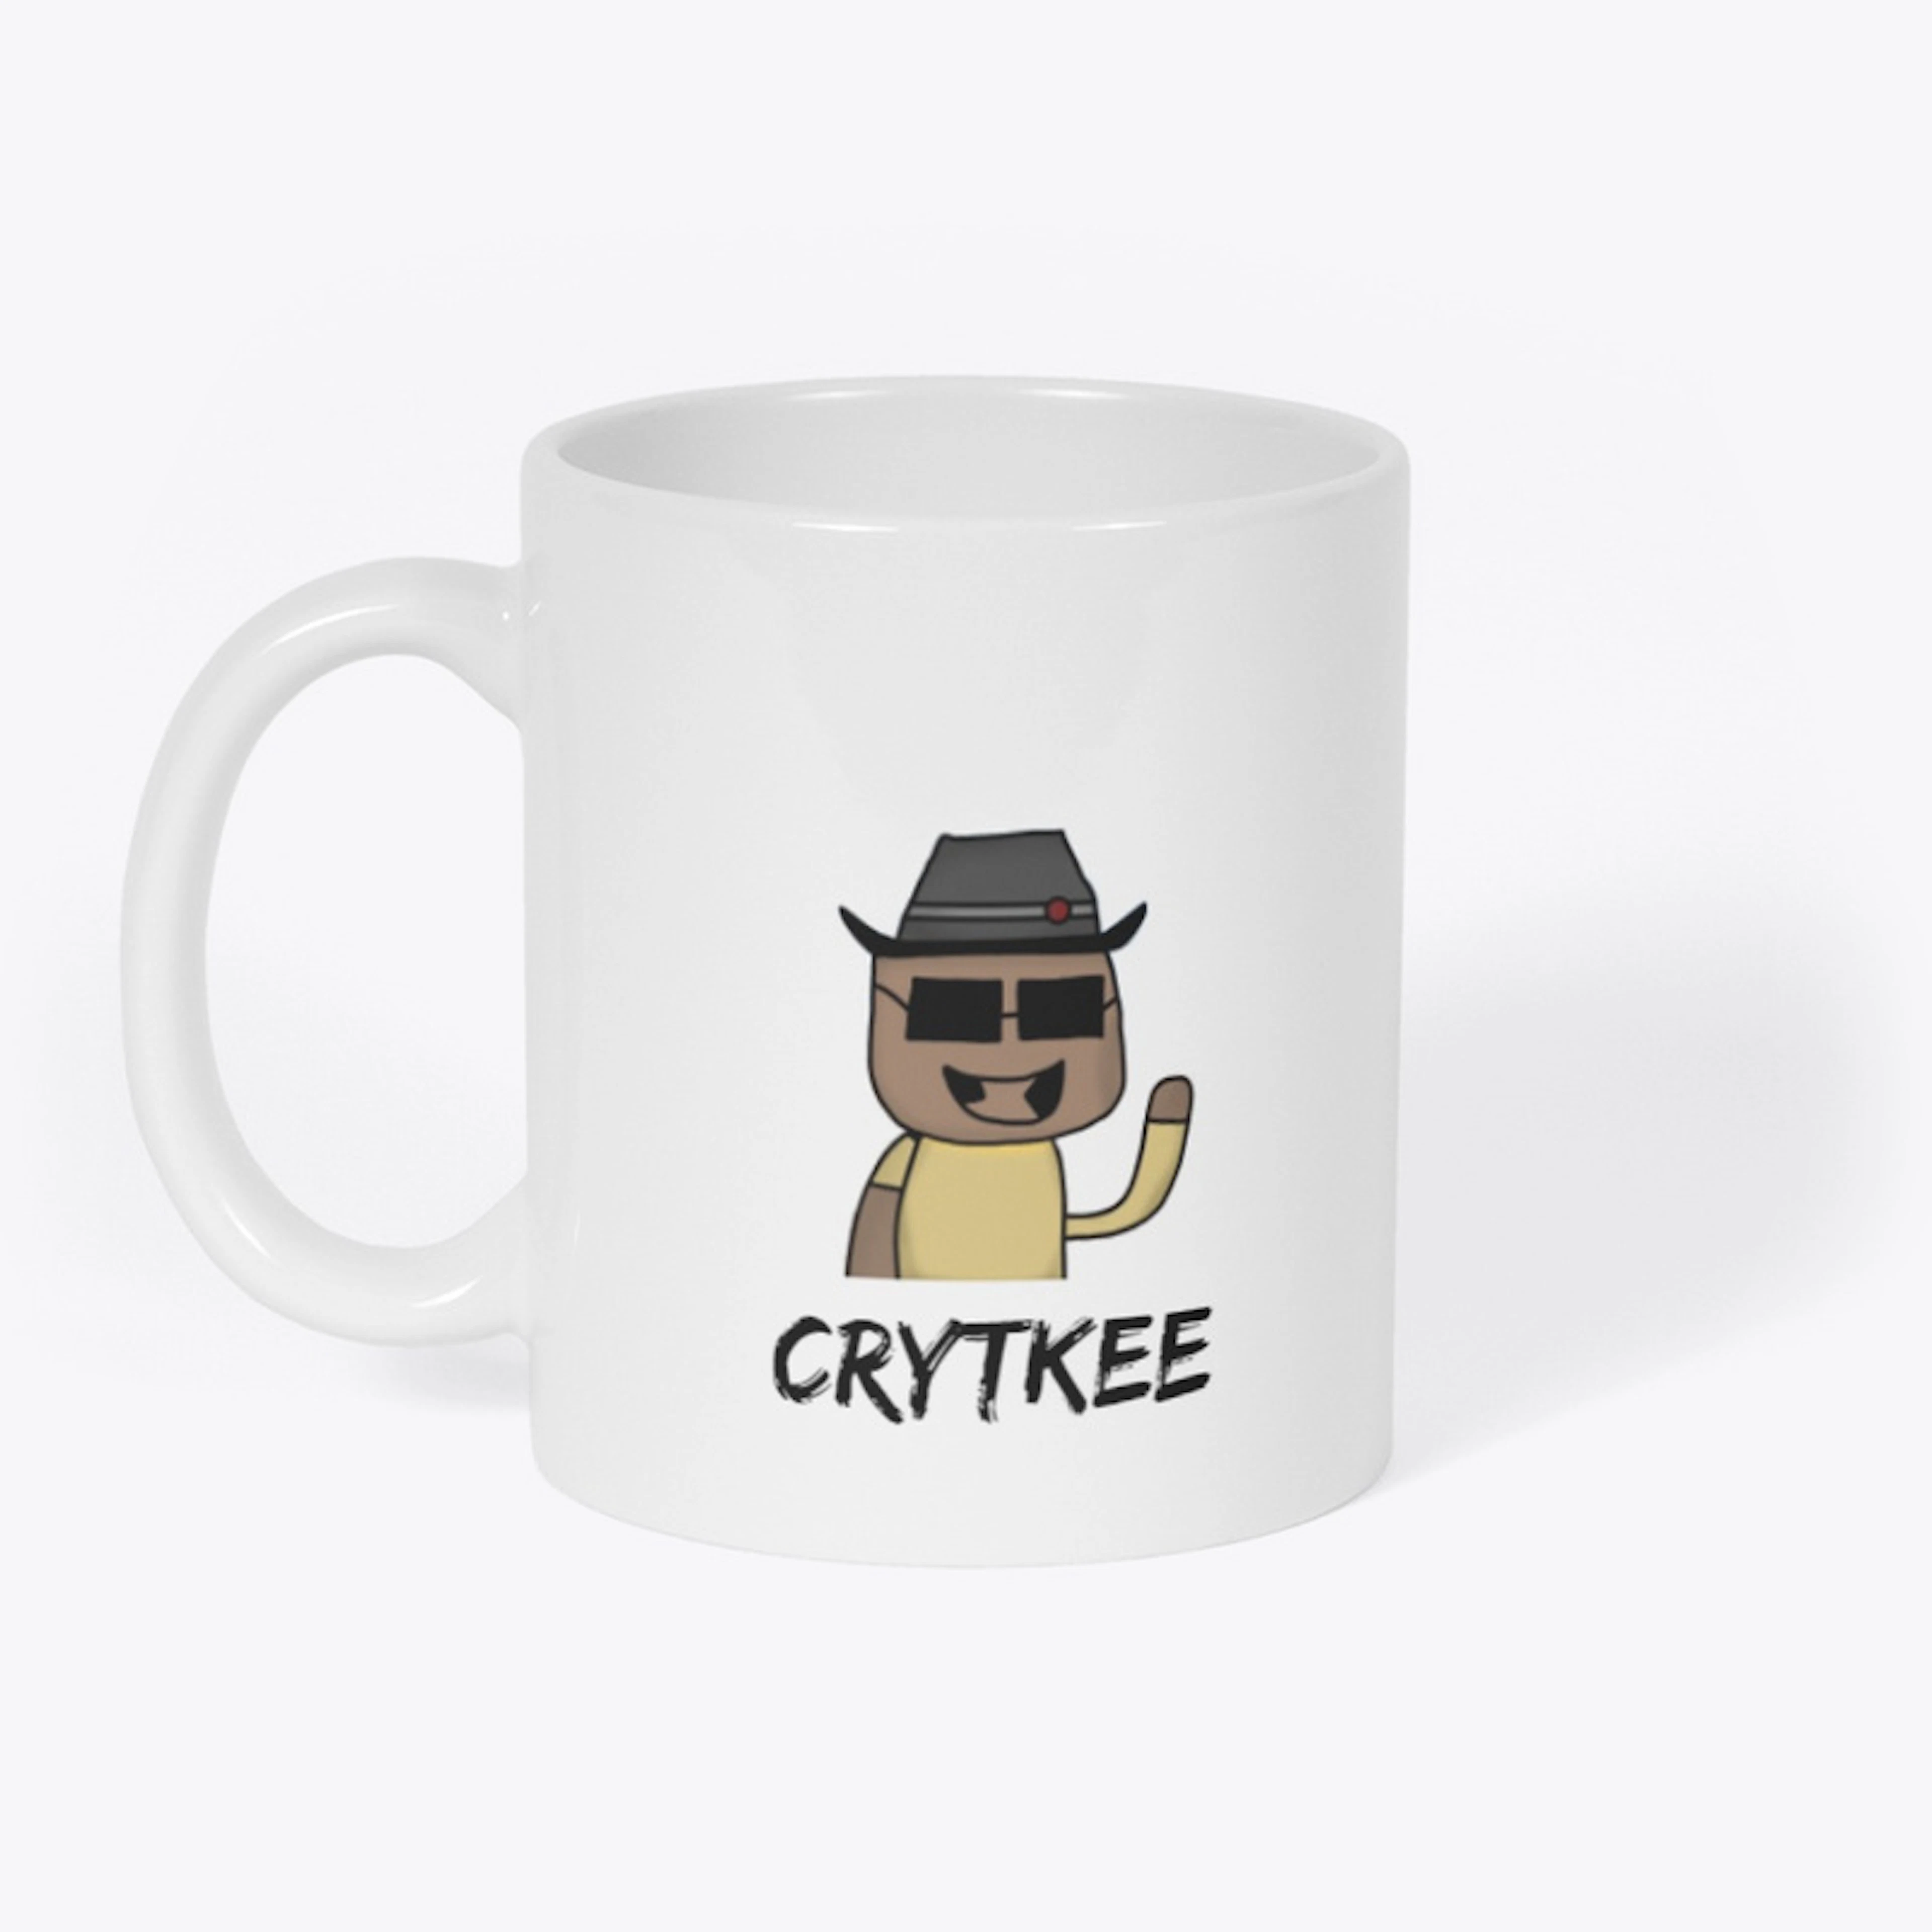 Crytkee's Epic Mug